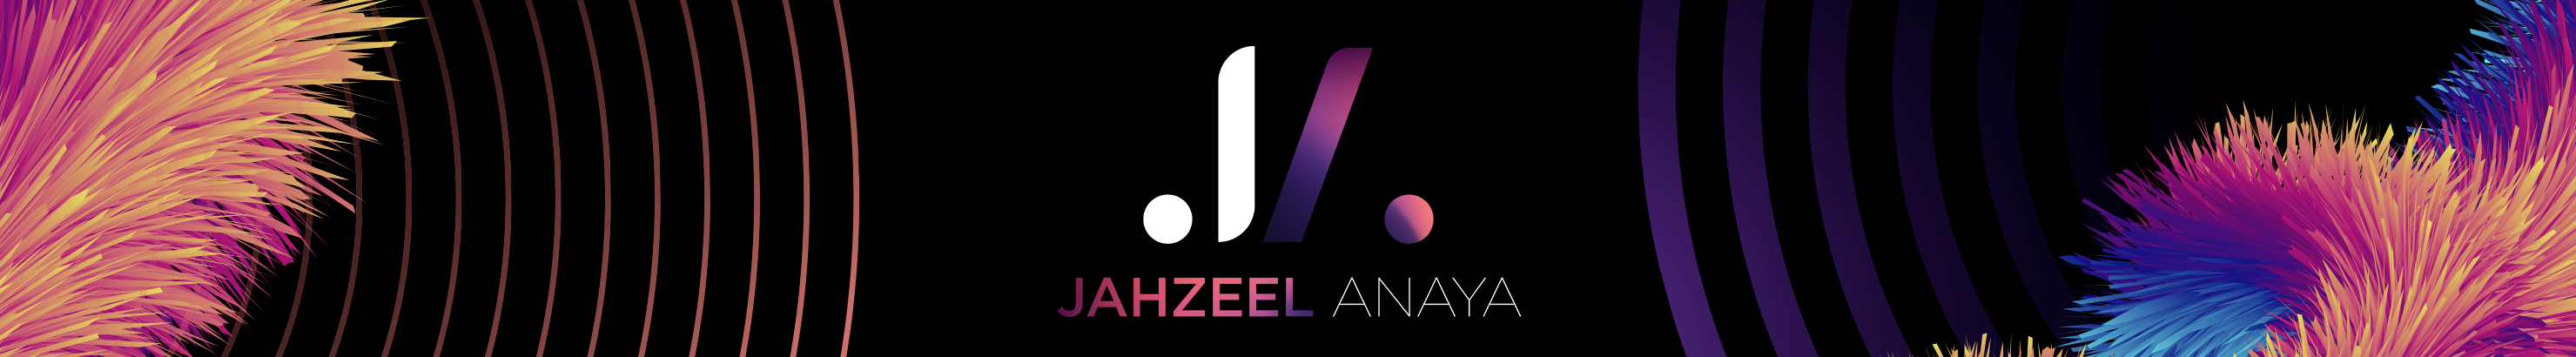 Jahzeel Anaya's profile banner